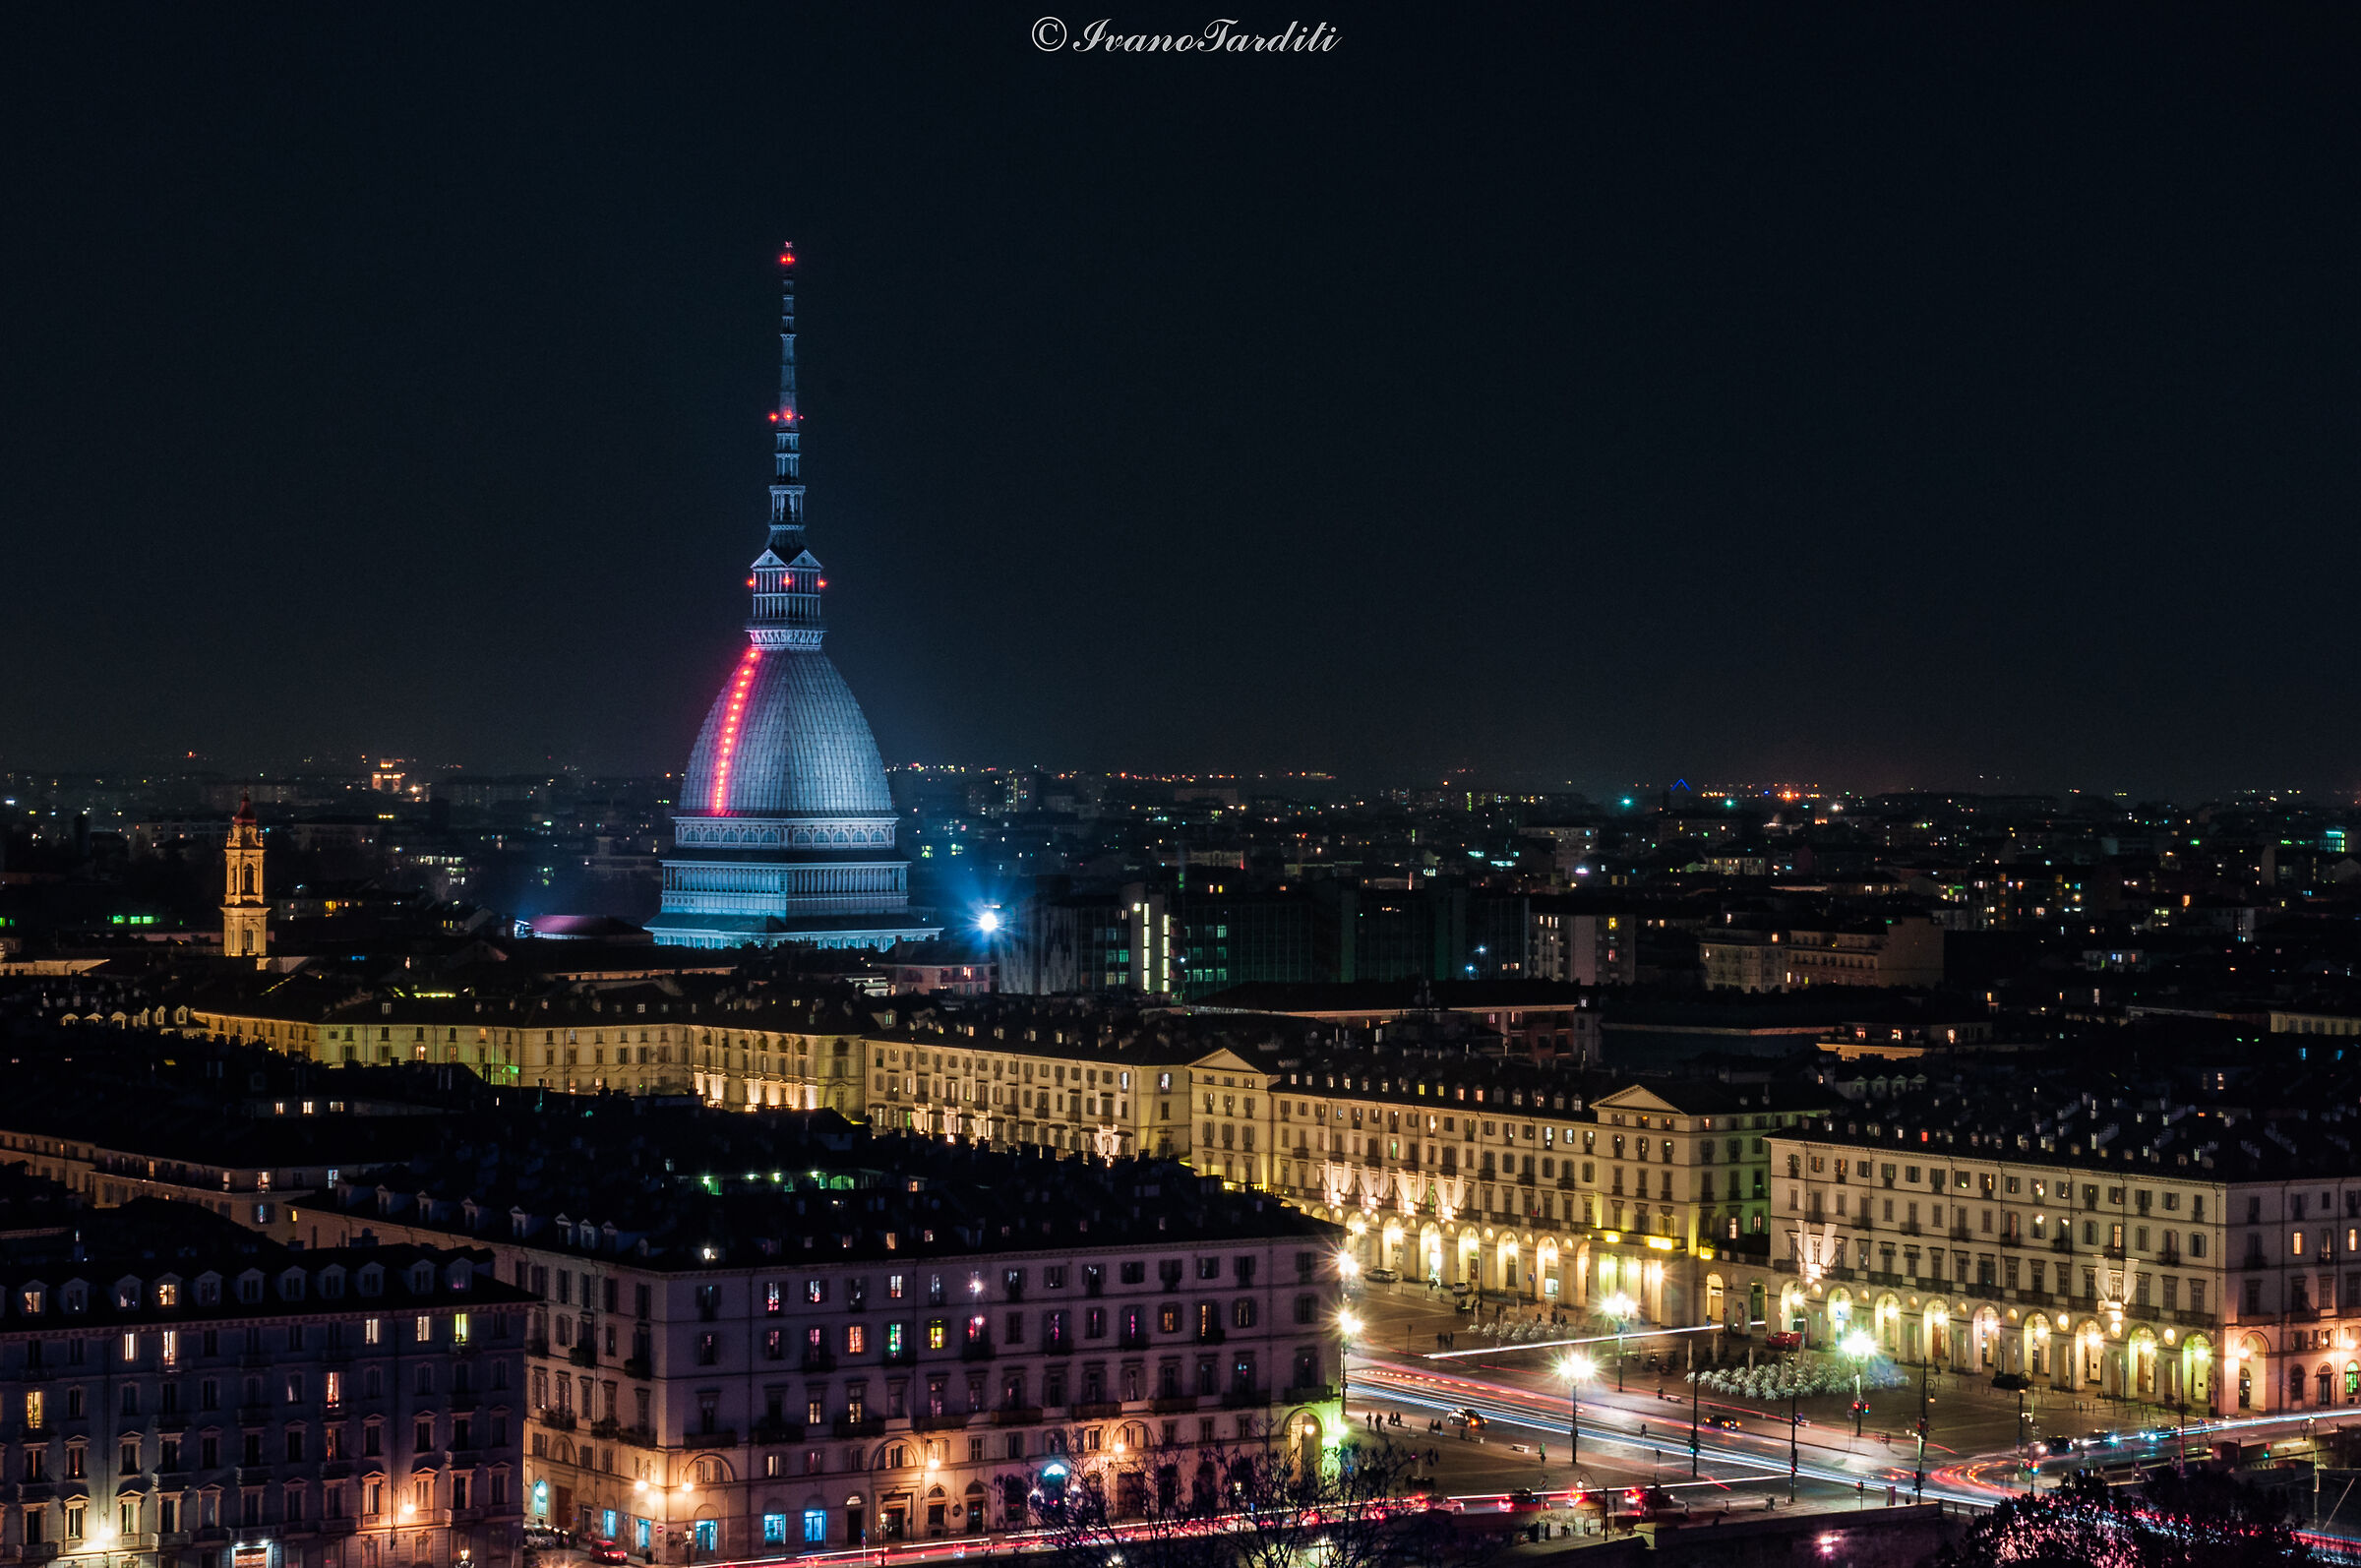 Turin by night ...